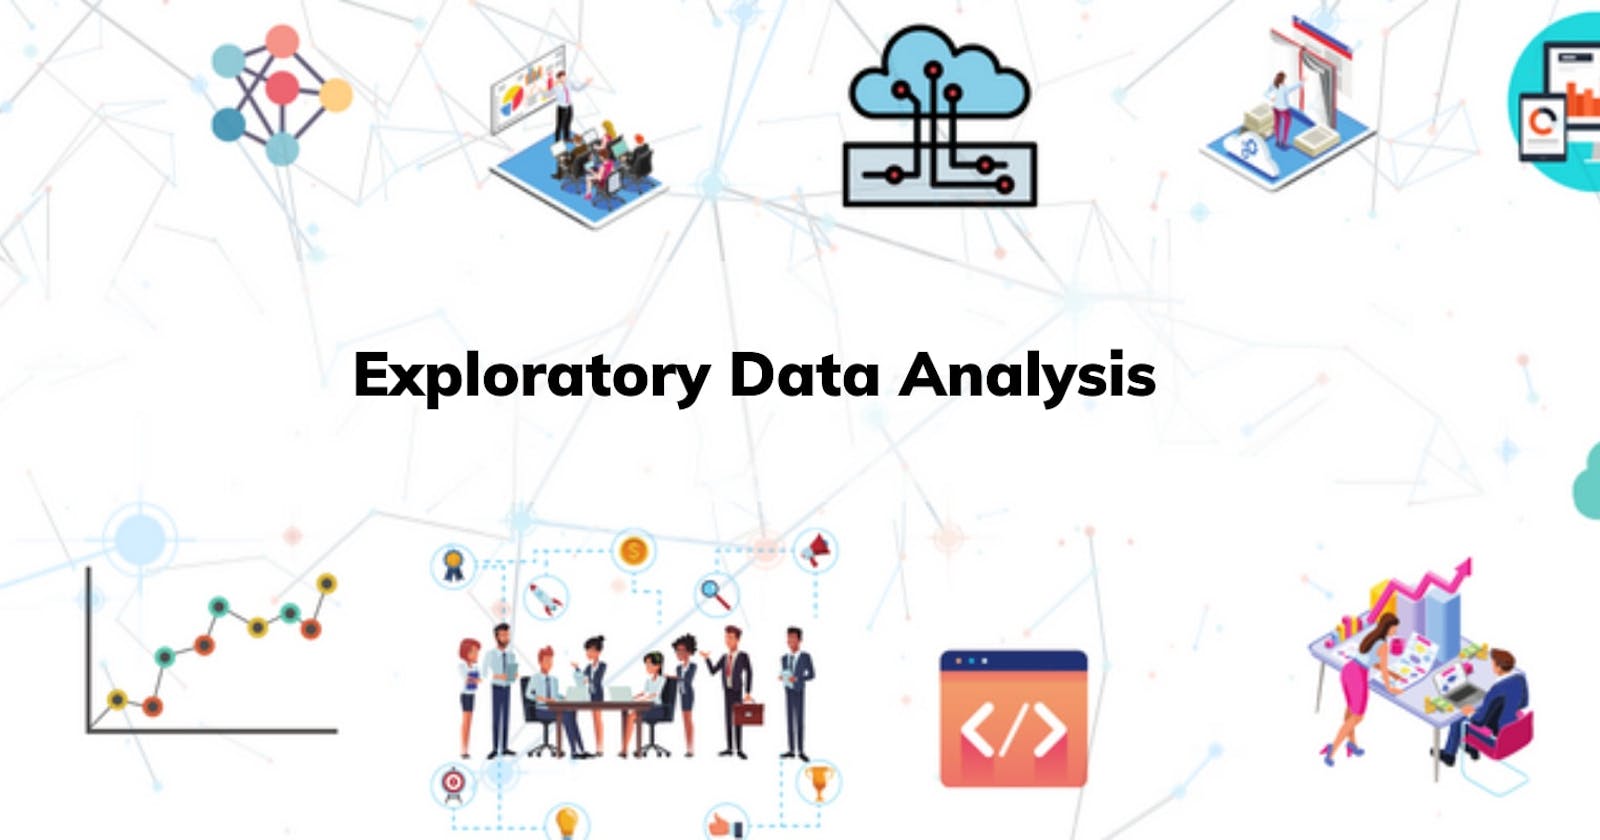 Day 2: Exploratory Data Analysis (EDA)